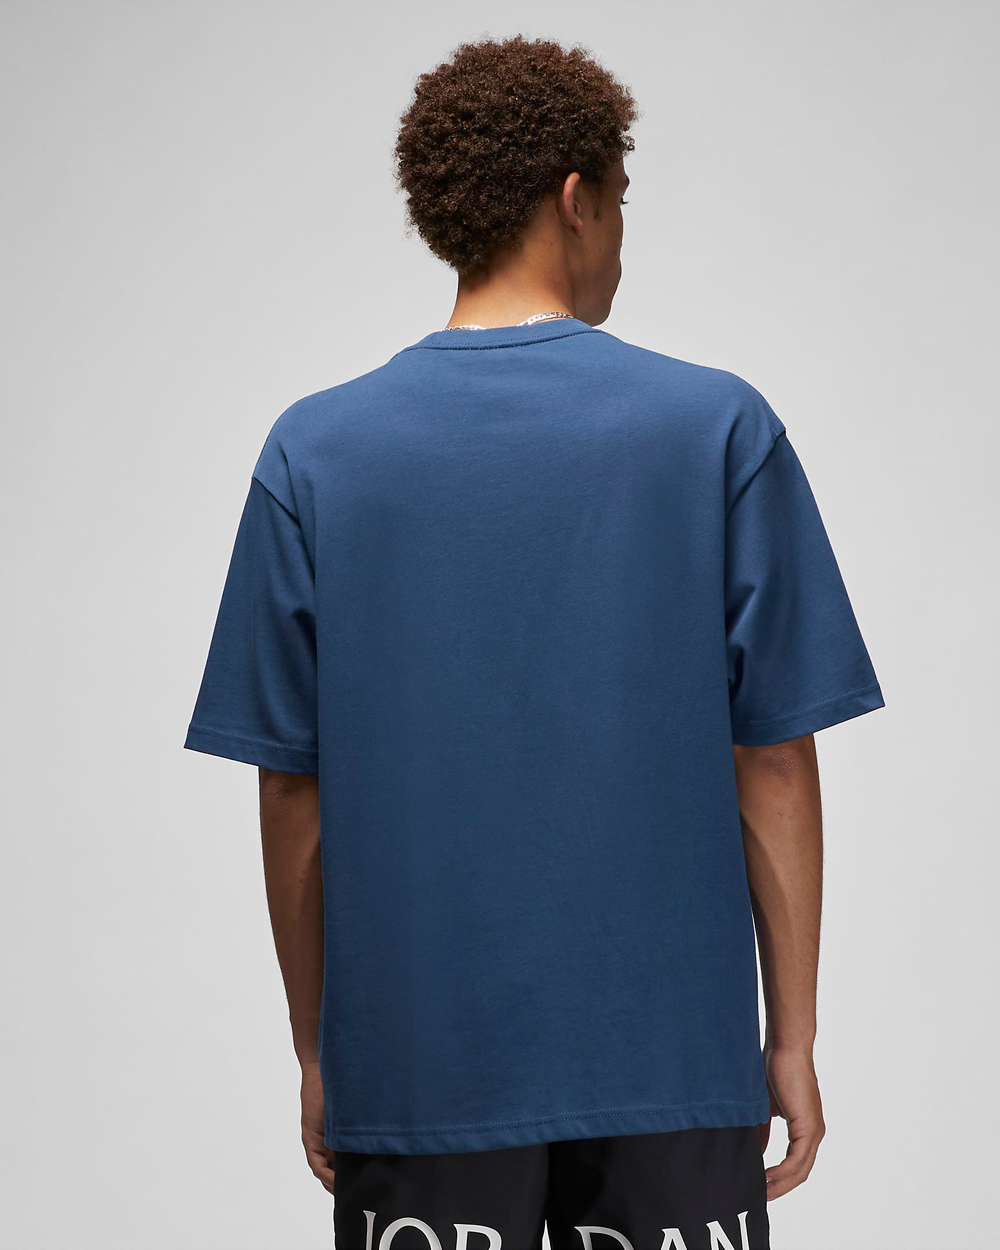 jordan-13-french-blue-t-shirt-2